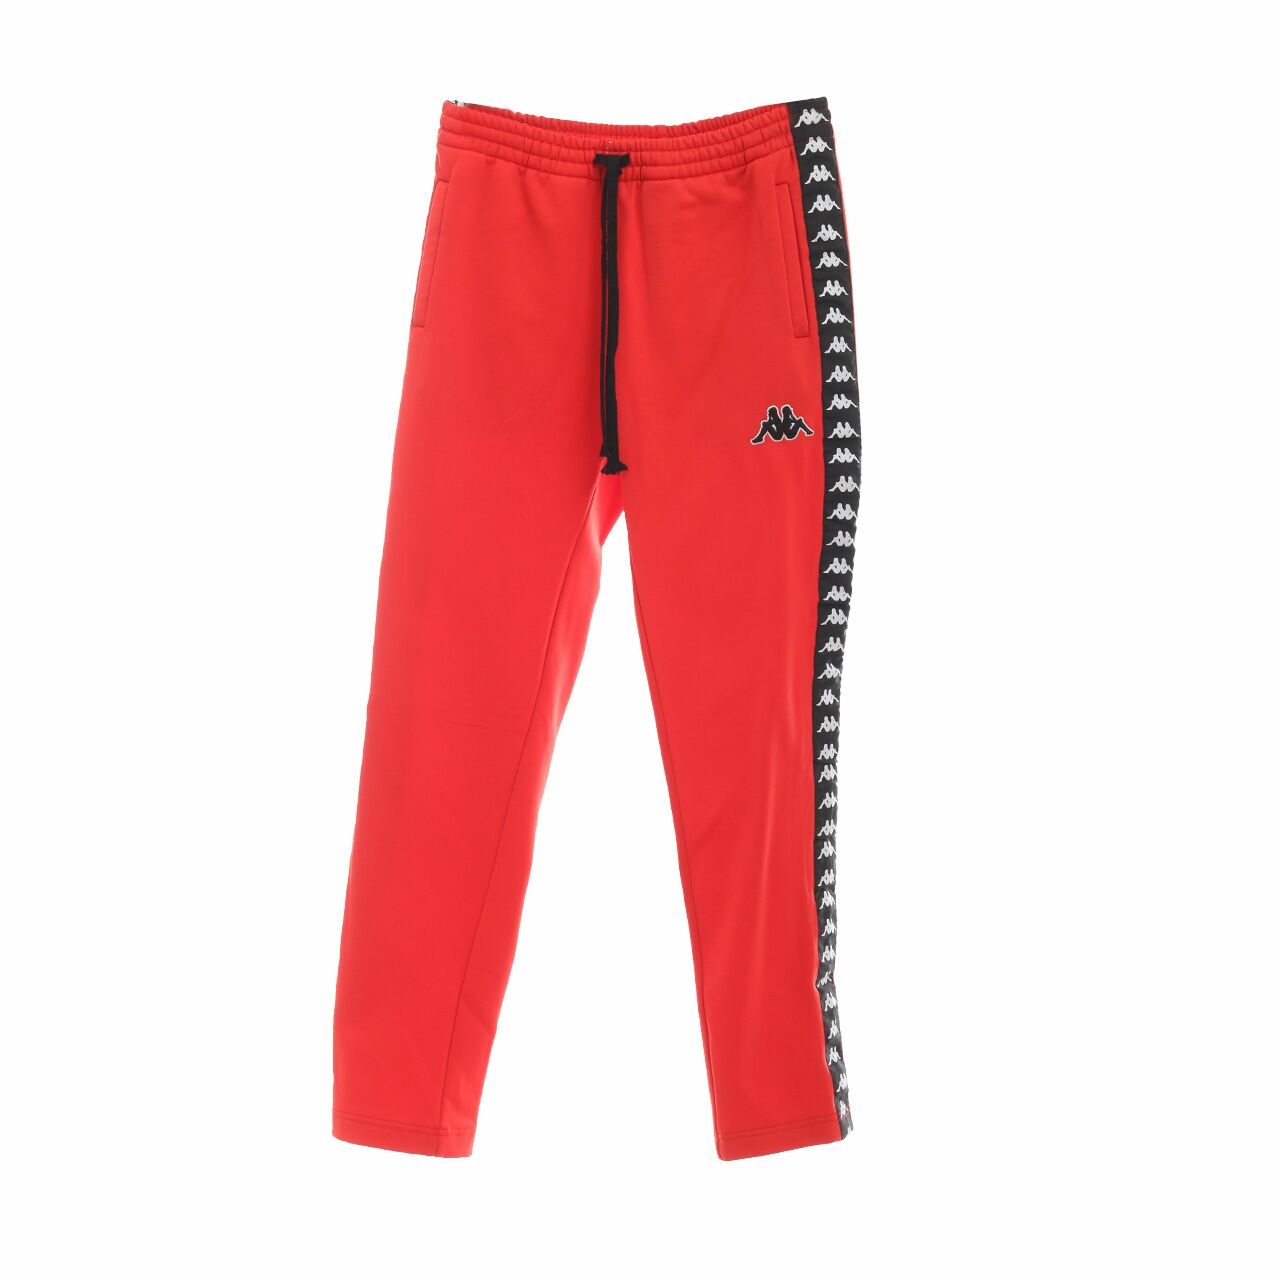 Kappa Red Training Long pants 